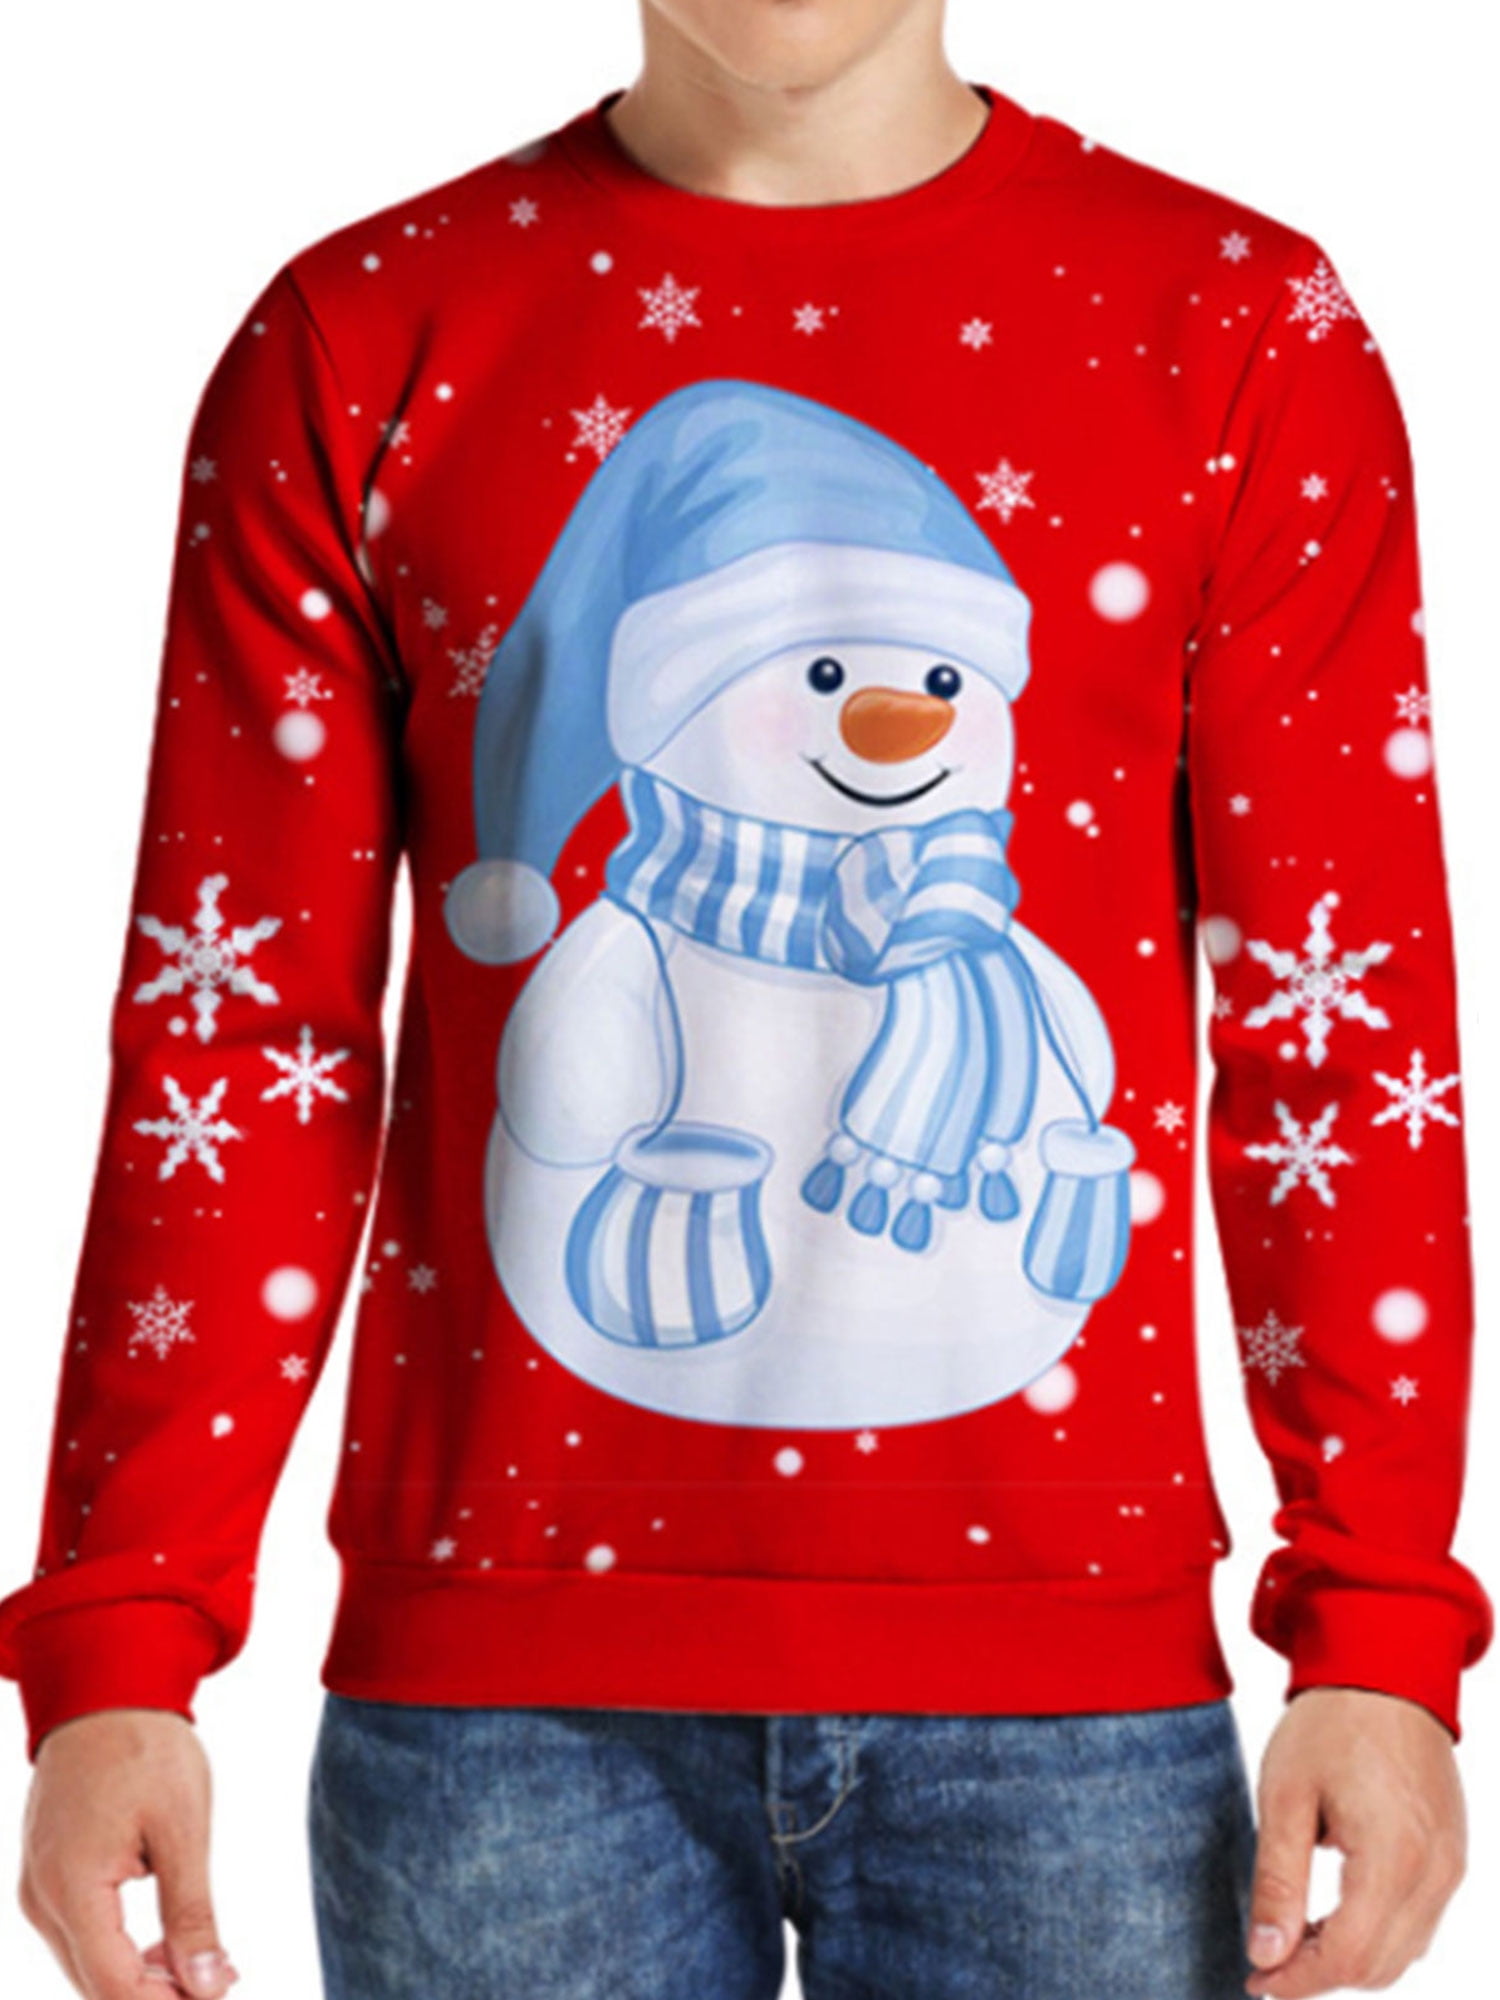 Christmas Unisex Men Women Hooded Sweatshirt Funny Print Pullover Top Blouse 